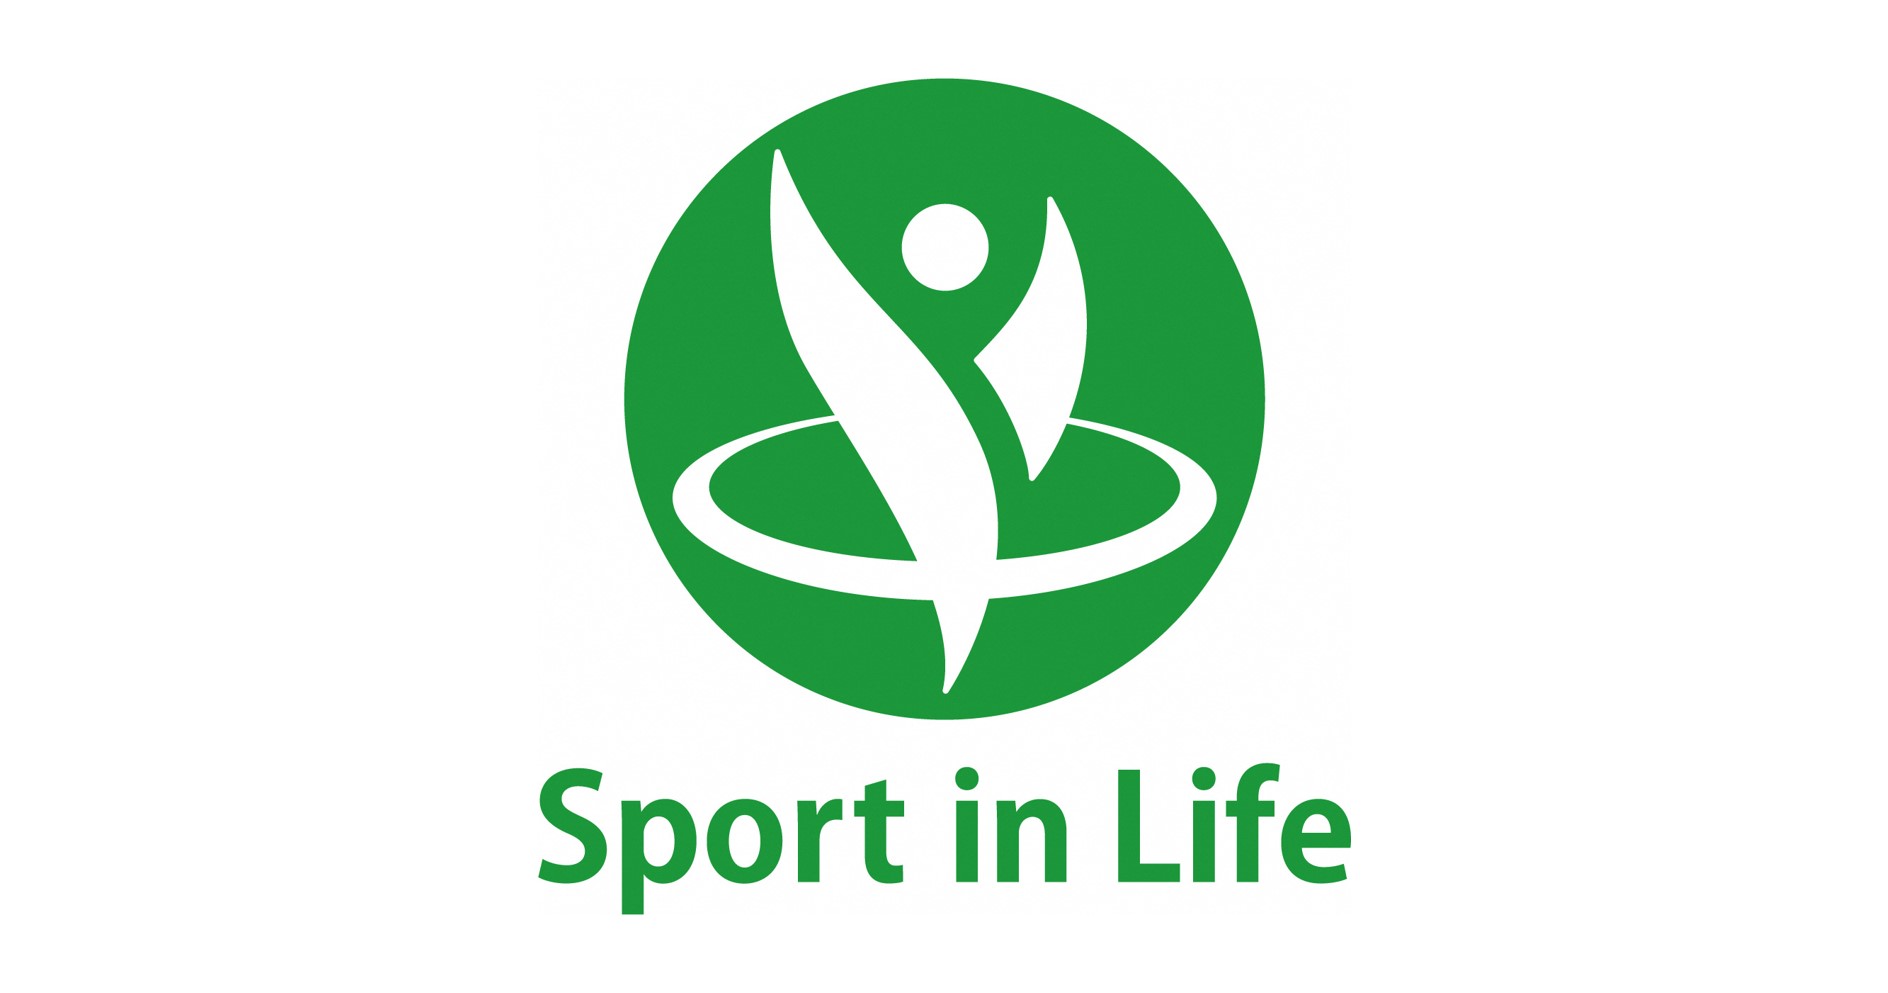 ONE COMPATH、スポーツ庁の「Sport in Life コンソーシアム」に加盟しました